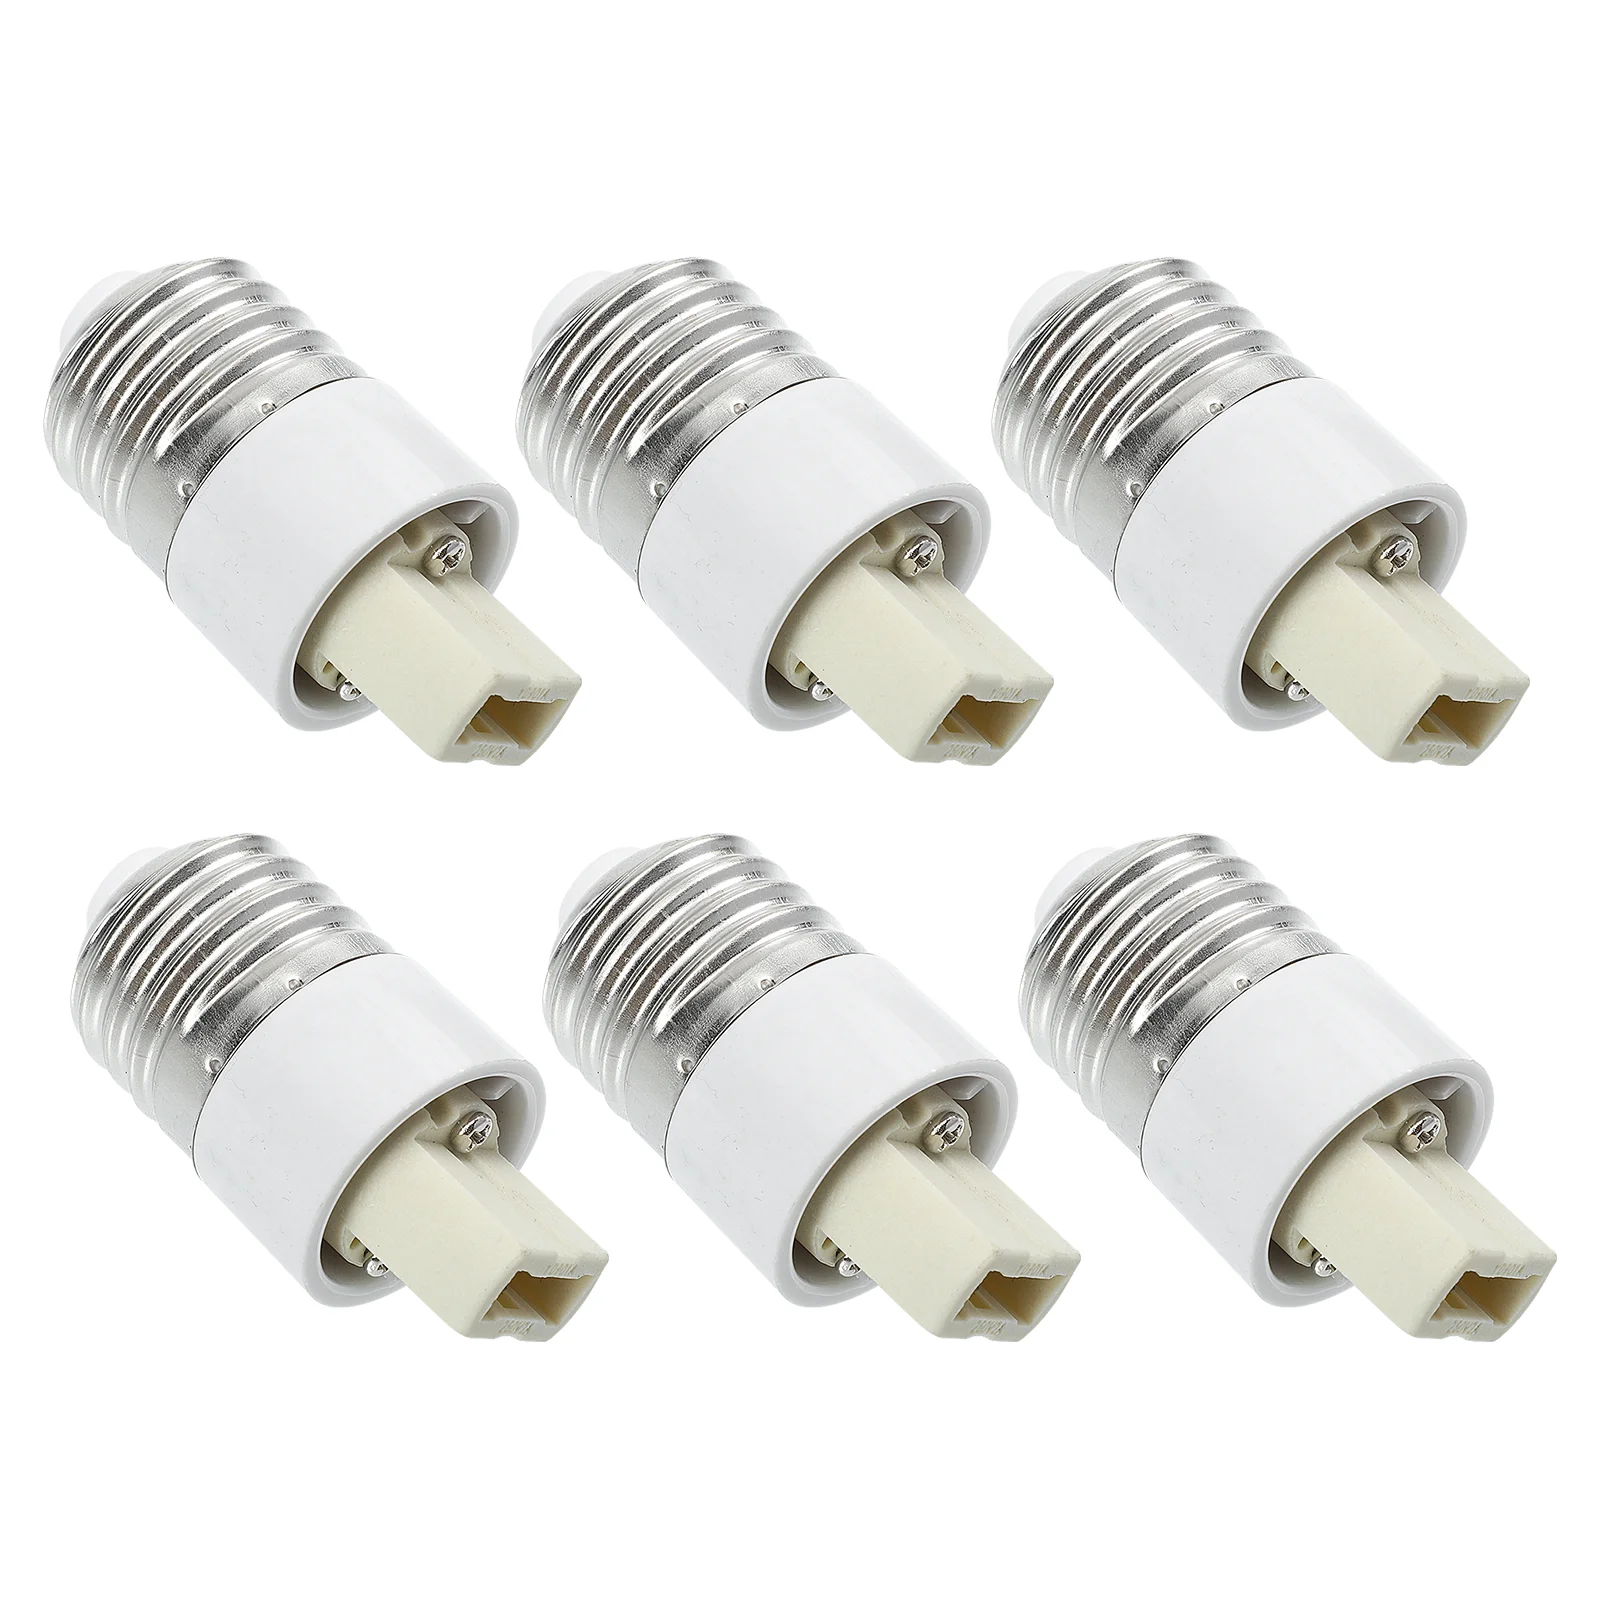 

Adapter Light Lamp Bulb Socket Converter Holder G9Base E27 Converters Adapters Lights Plug Splitter Mogul Outlet Candelabra Led